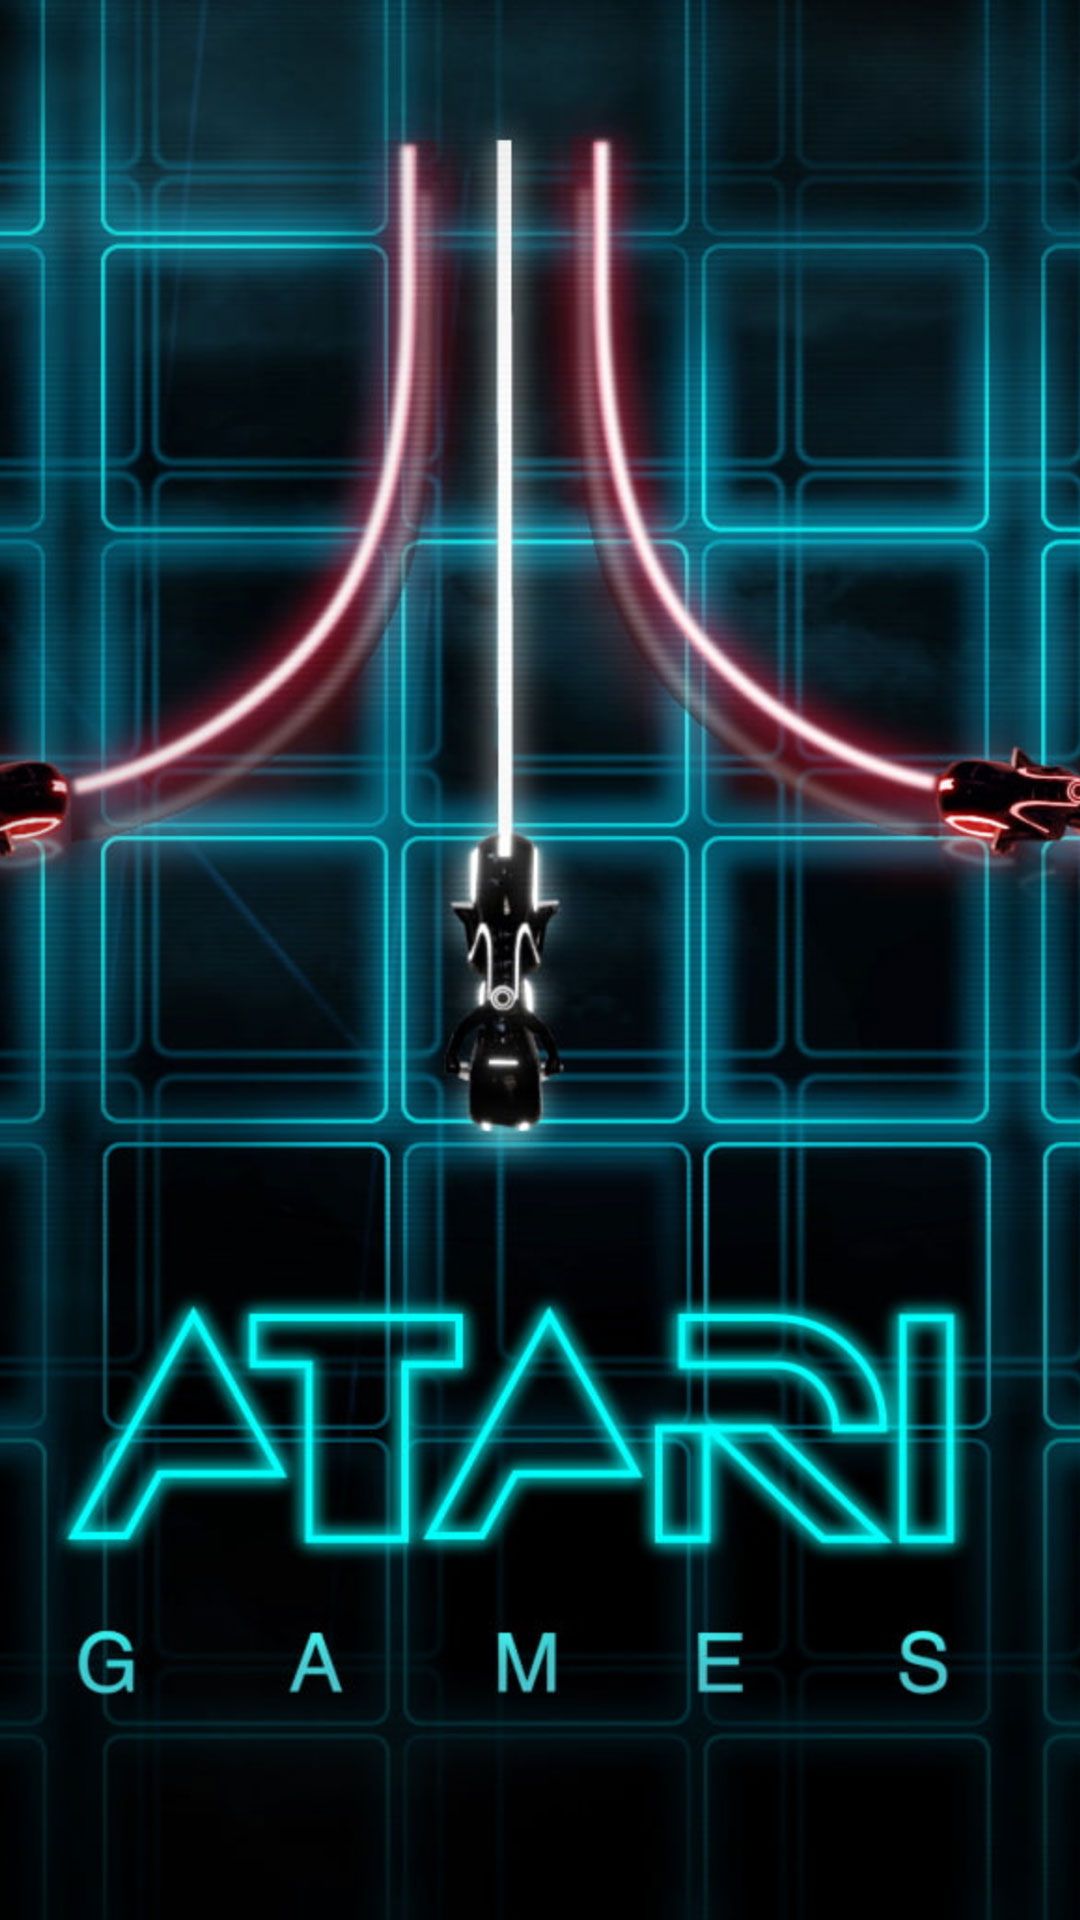 Atari wallpaper by DarkDroid  Download on ZEDGE  2072